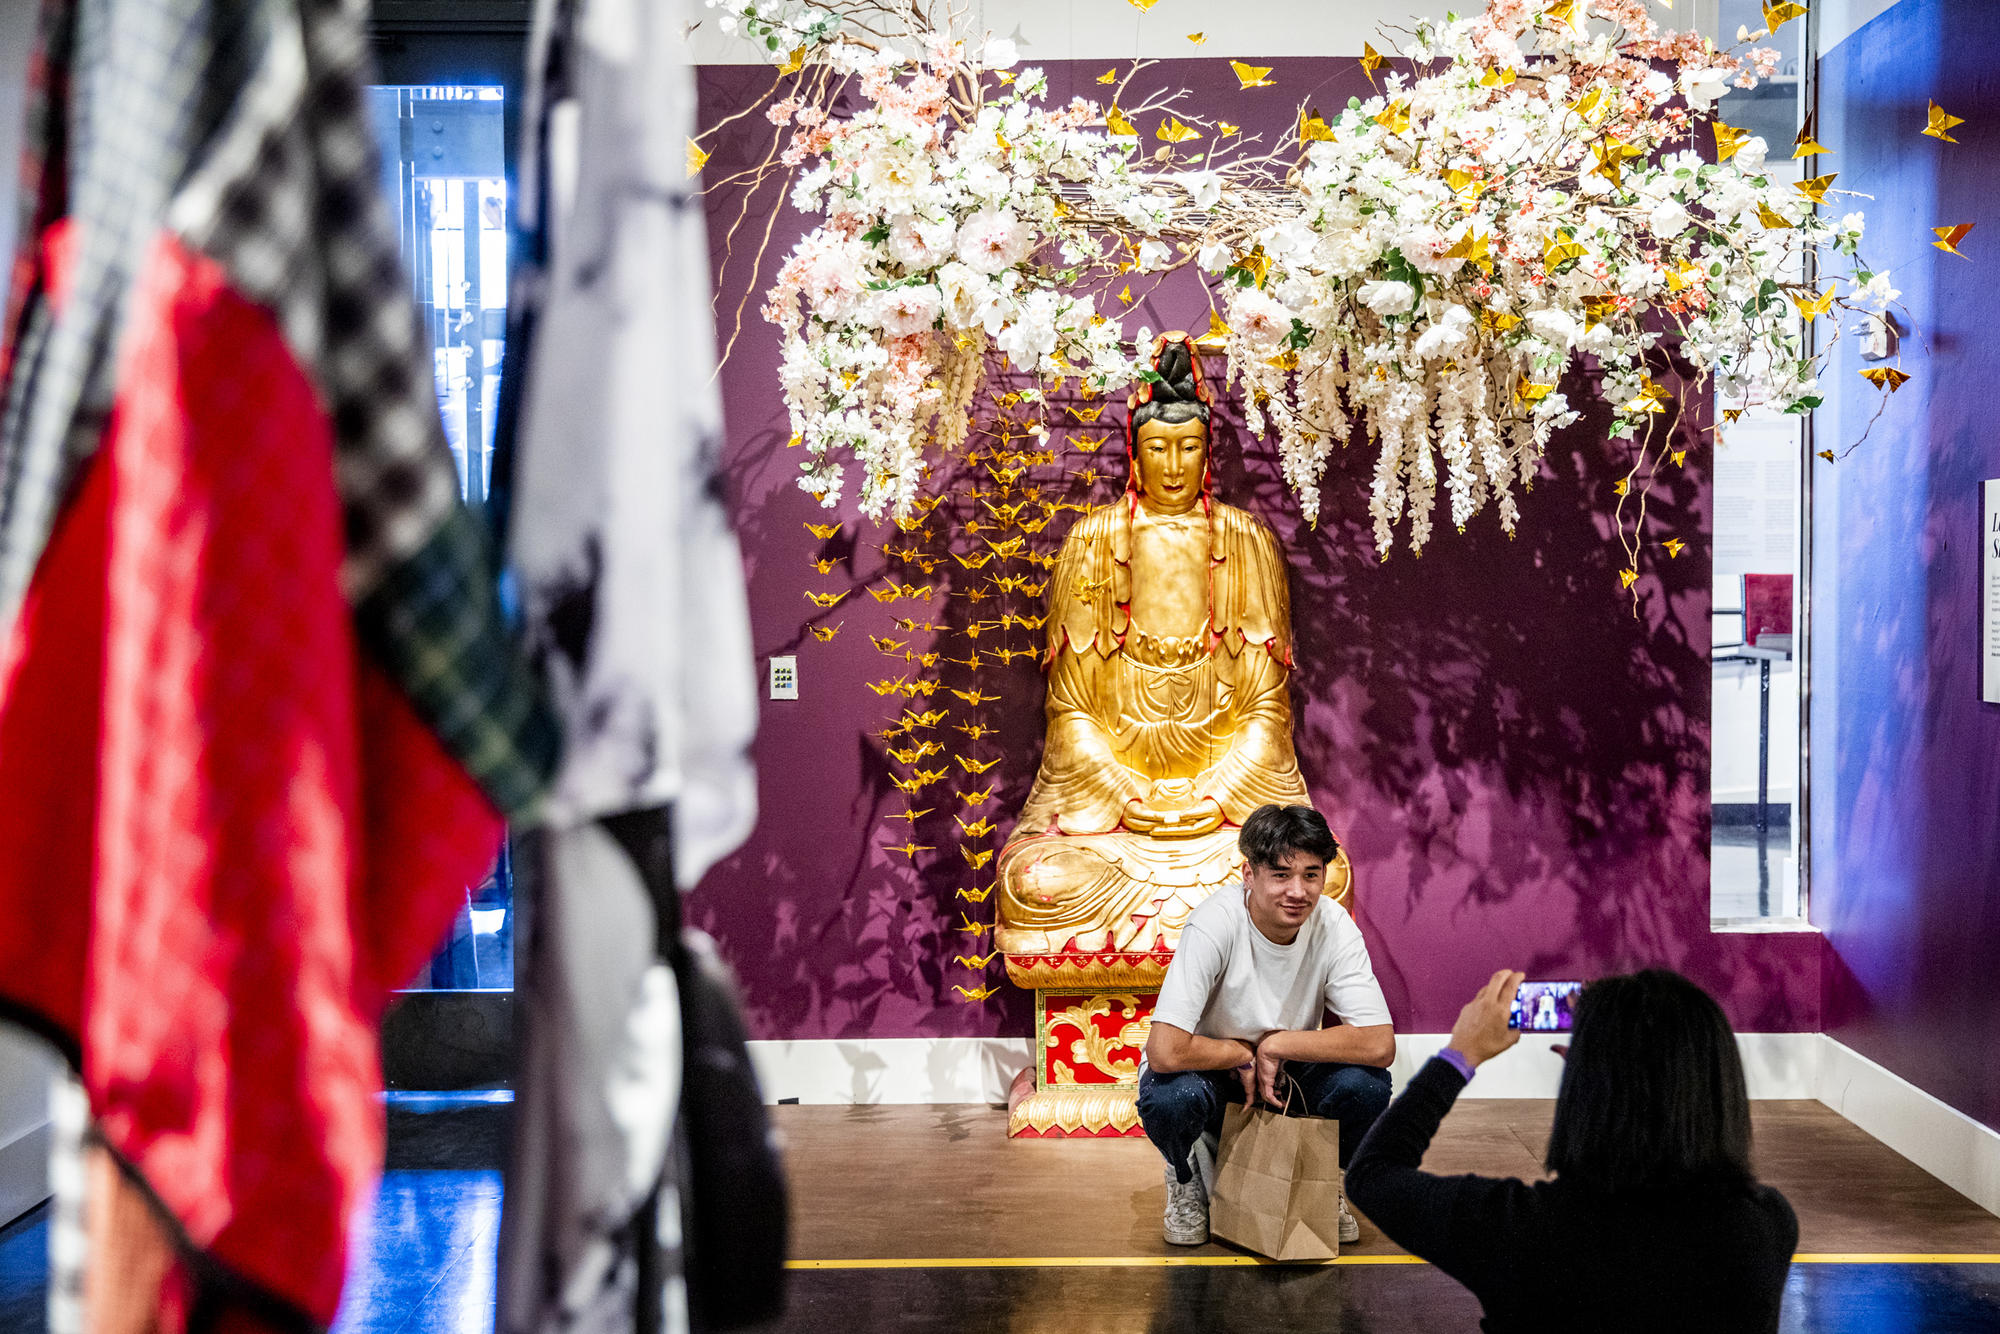 Keats kneeling in front a Buddha statue